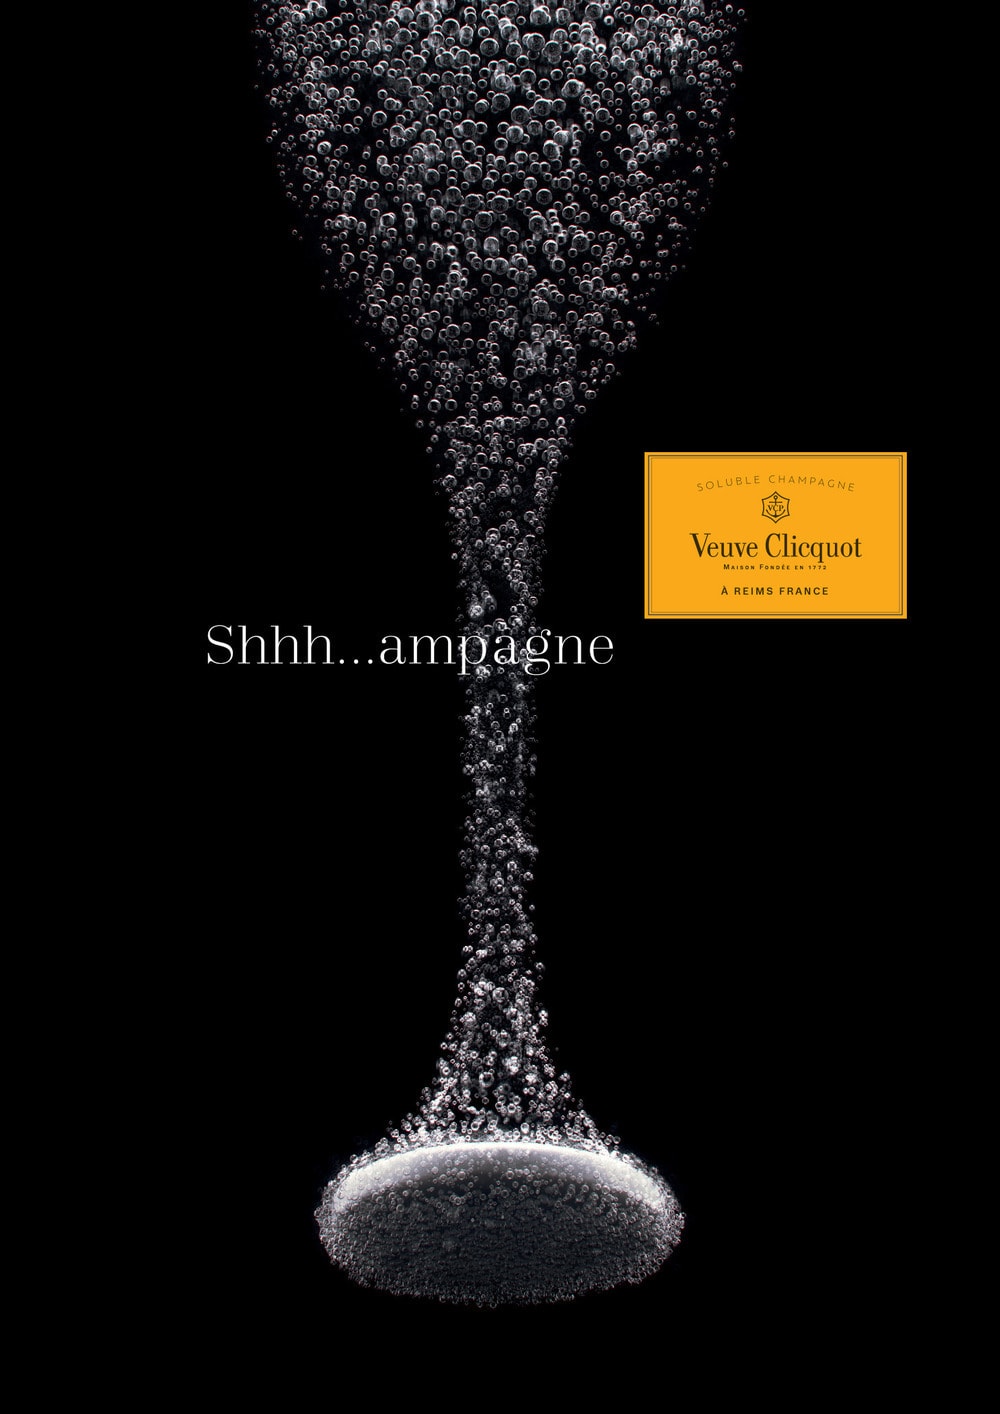 Comparing LVMH brand Veuve Clicquot champagne to Vechain traced